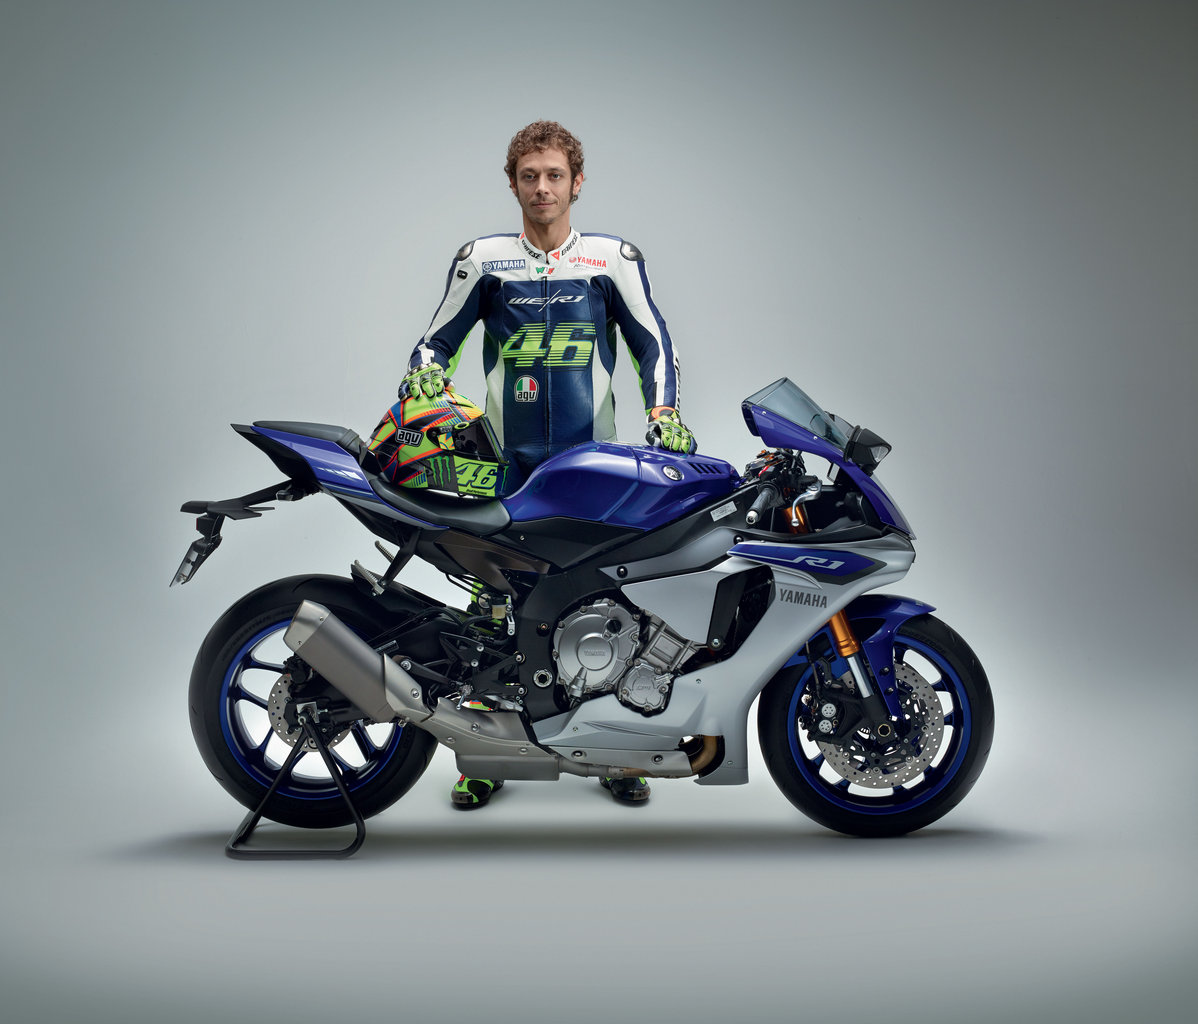 Listino Yamaha YZF R125 Sportive - image 14286_1 on https://moto.motori.net